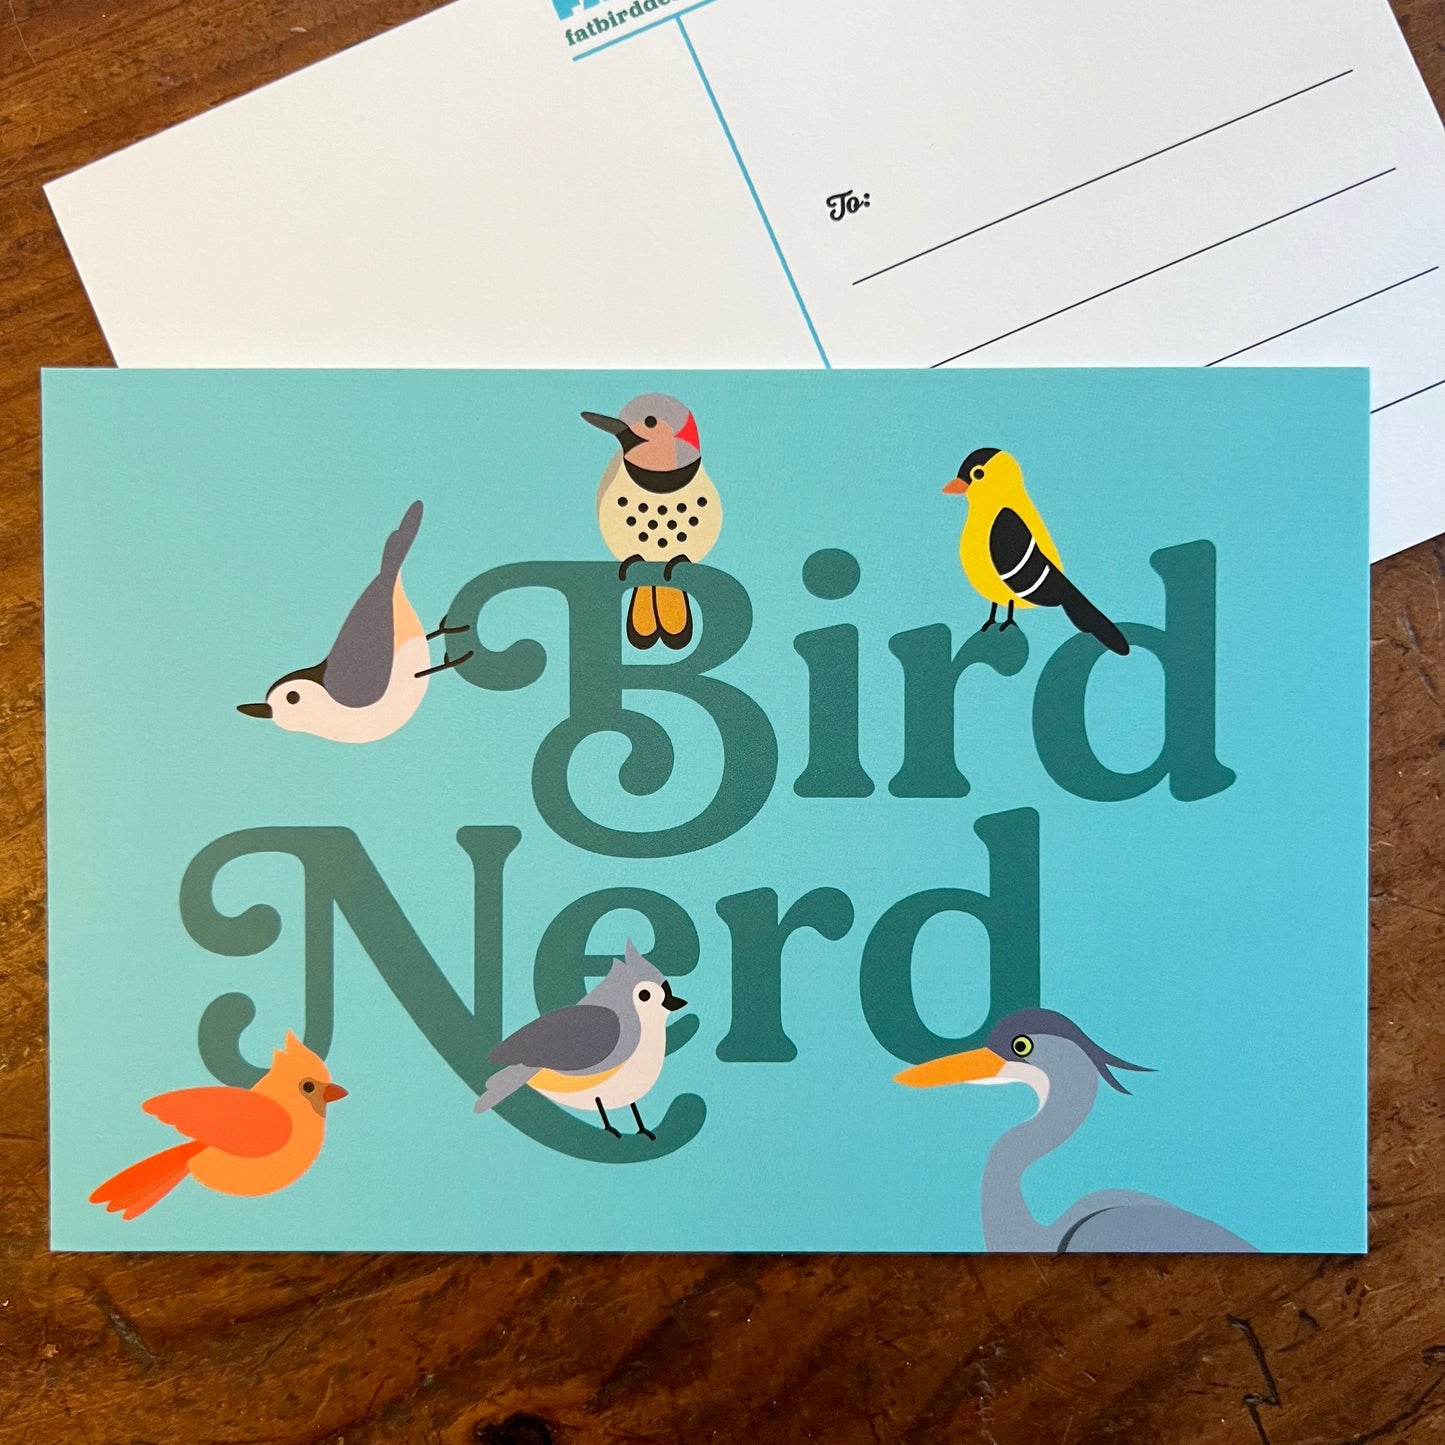 Fatbird Postcards 6x4 inches